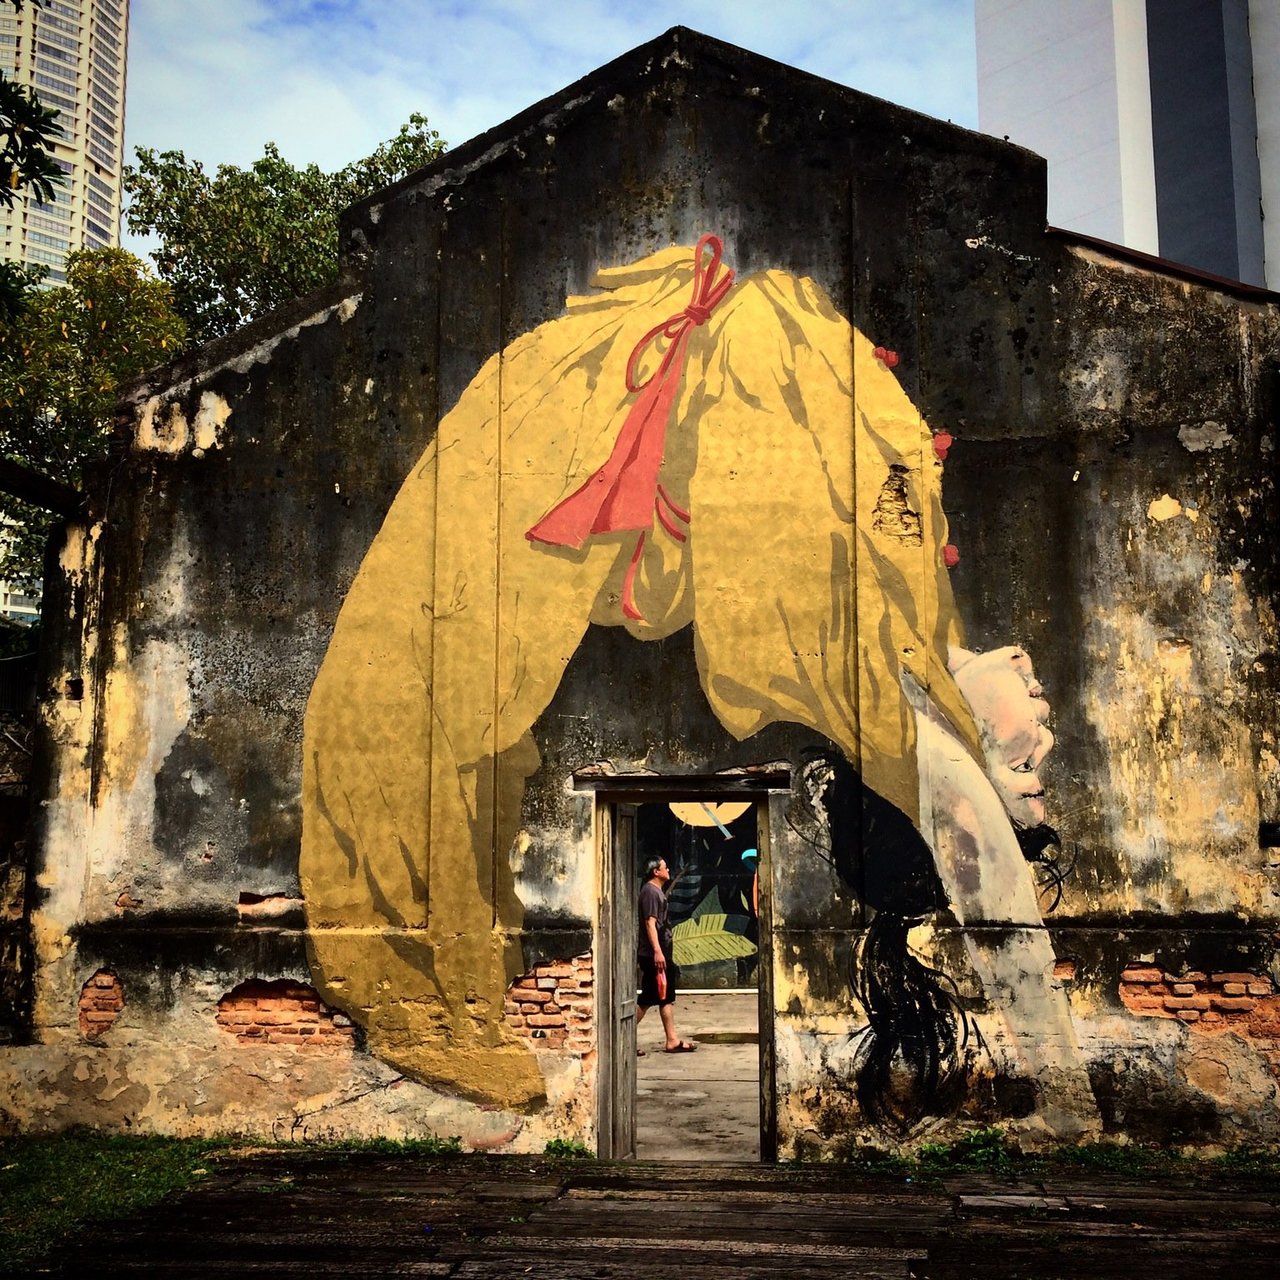 Epic mural in Penang. artist unknown#streetart #mural #graffiti #art https://t.co/SuRV9Rjdwj